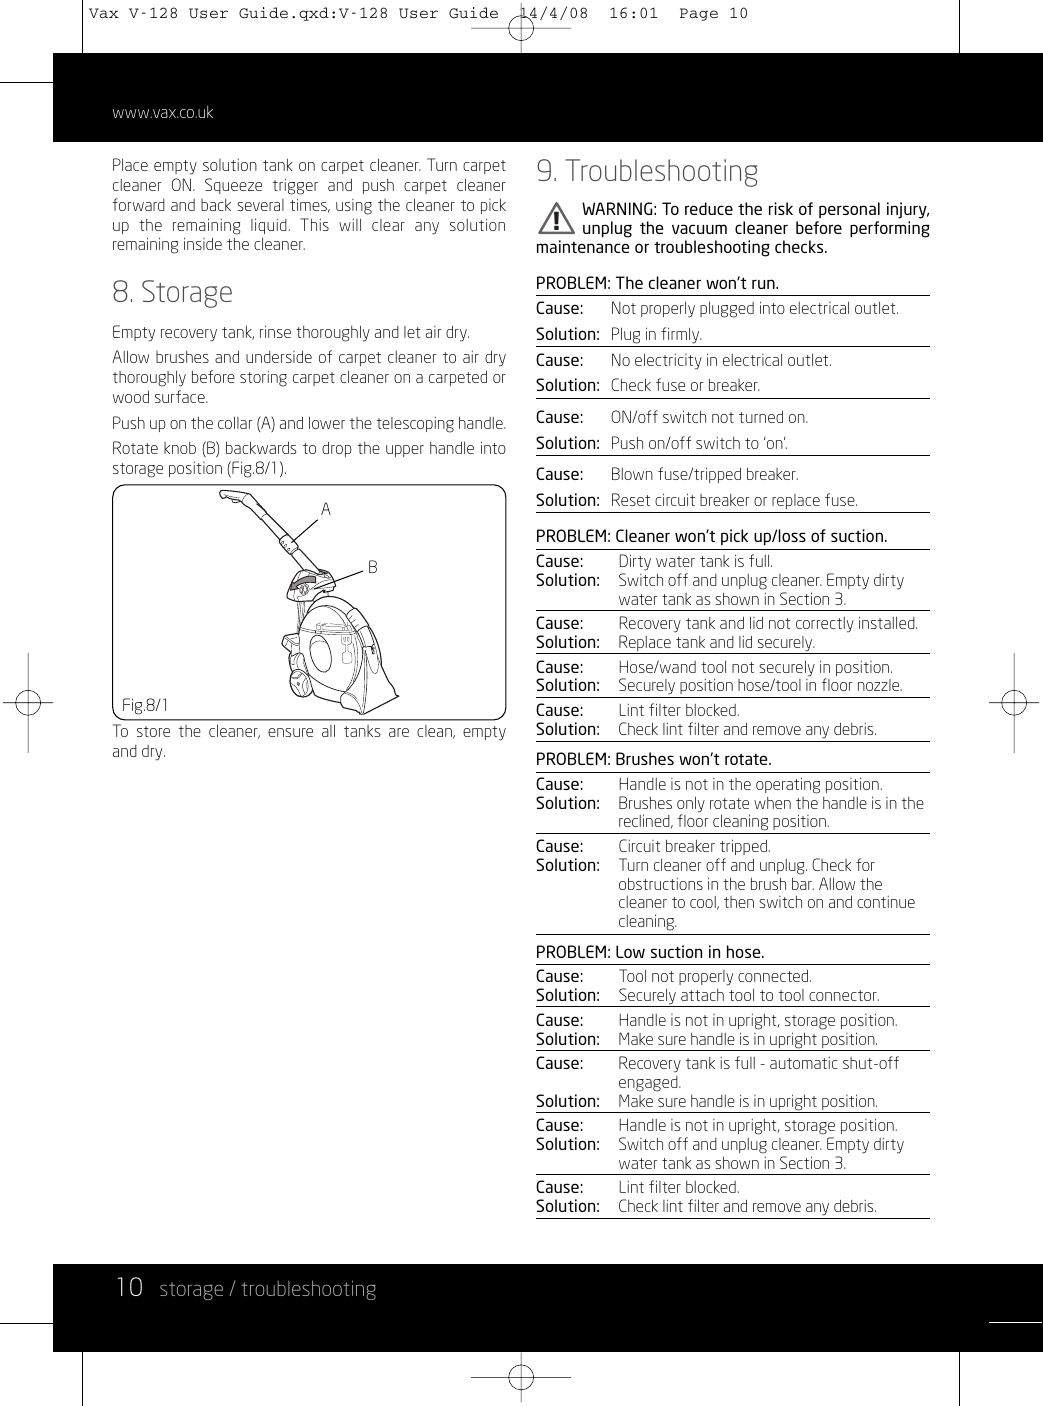 Page 10 of 12 - Vizio Vizio-V-128-Users-Manual- Vax V-128 Agility Carpet Washer  Vizio-v-128-users-manual